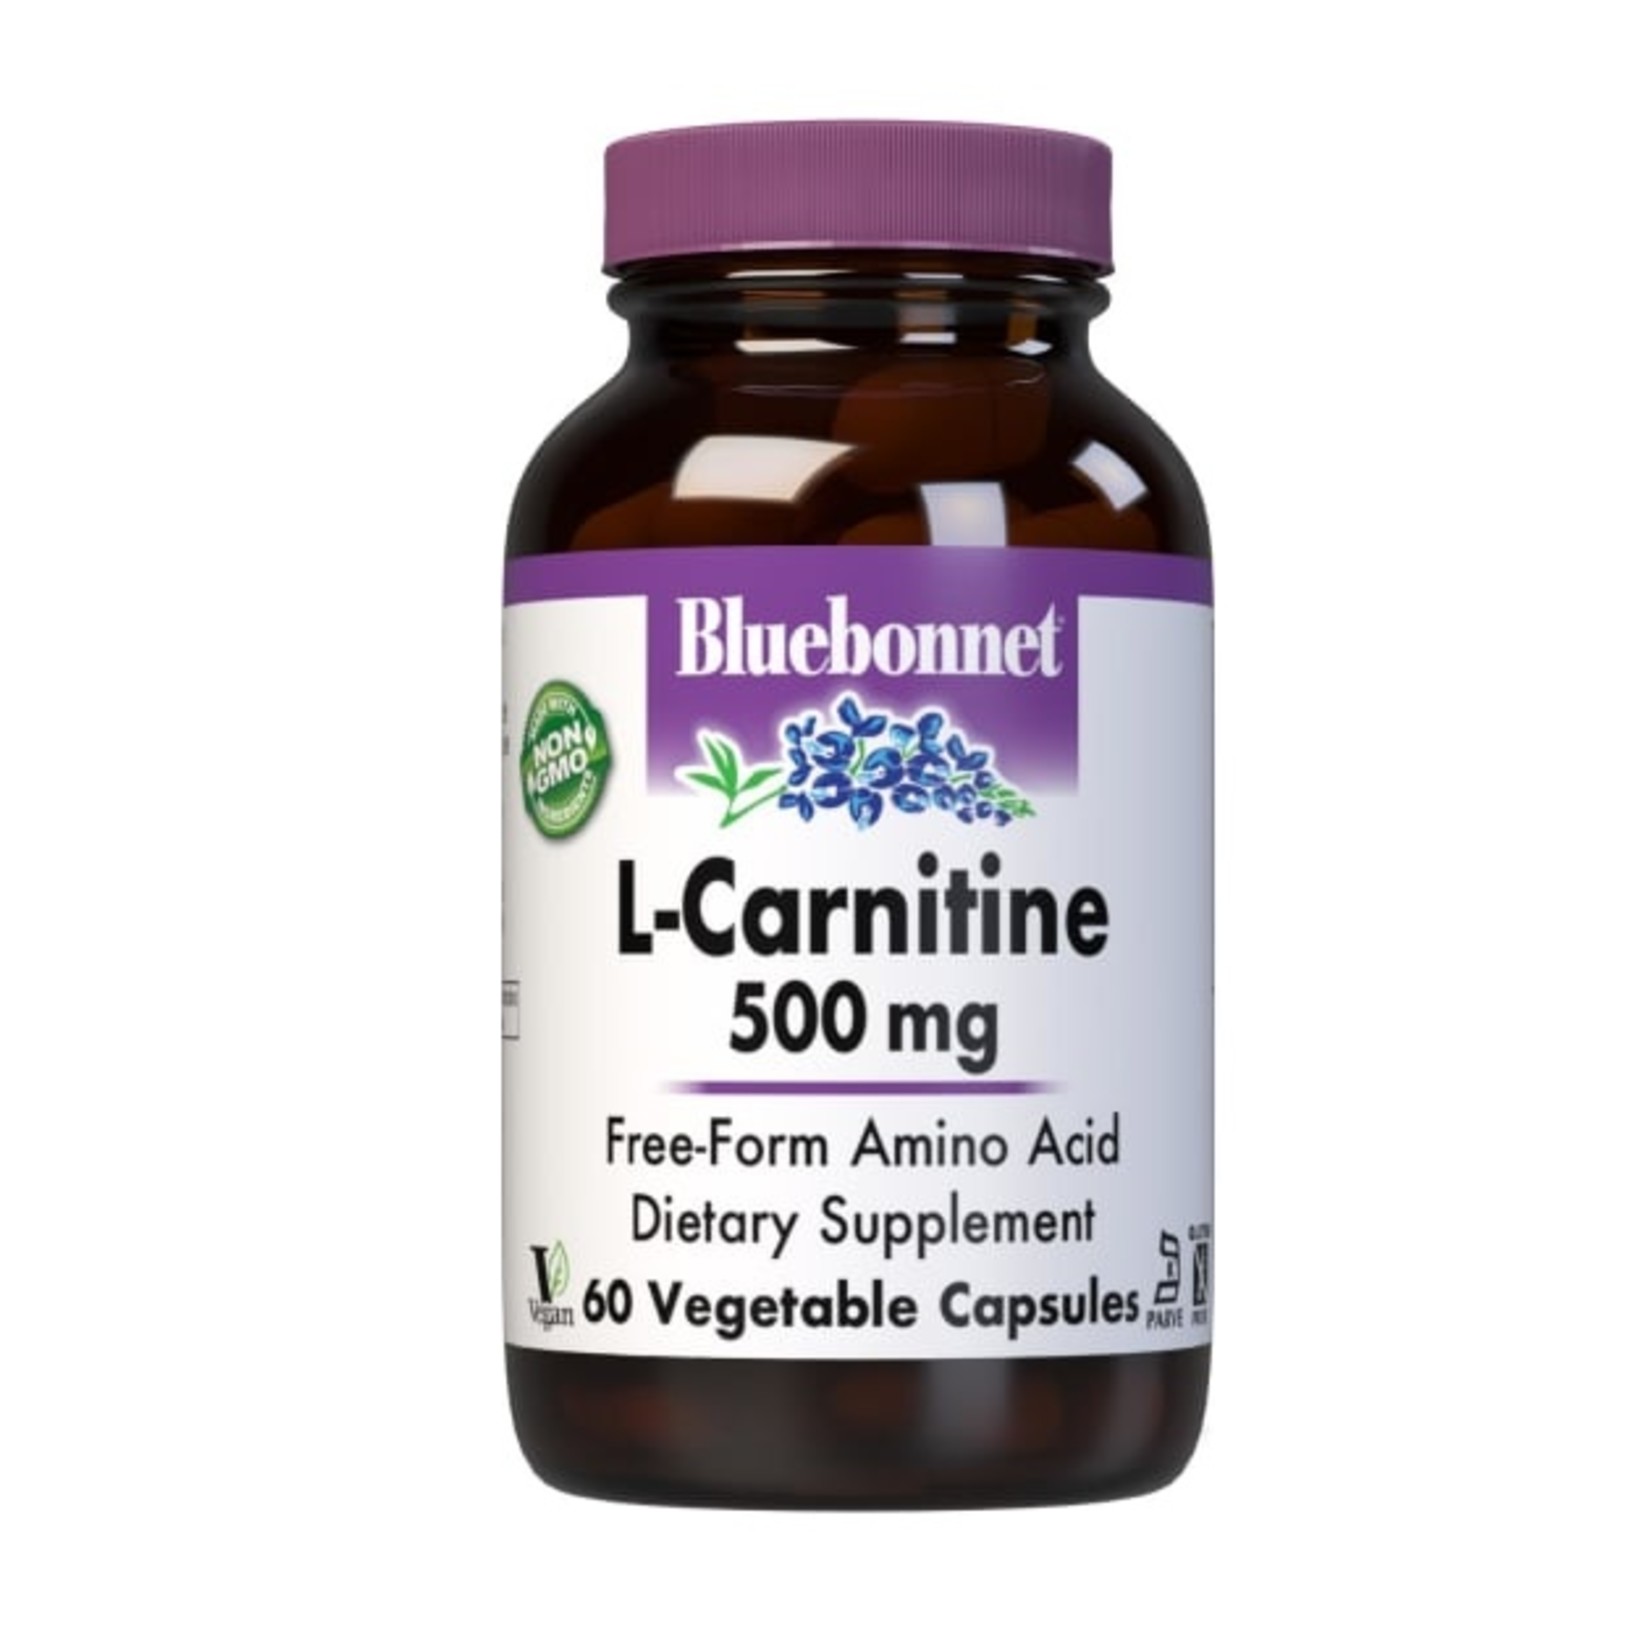 Bluebonnet Bluebonnet - L-Carnitine 500 mg - 60 Veg Capsules